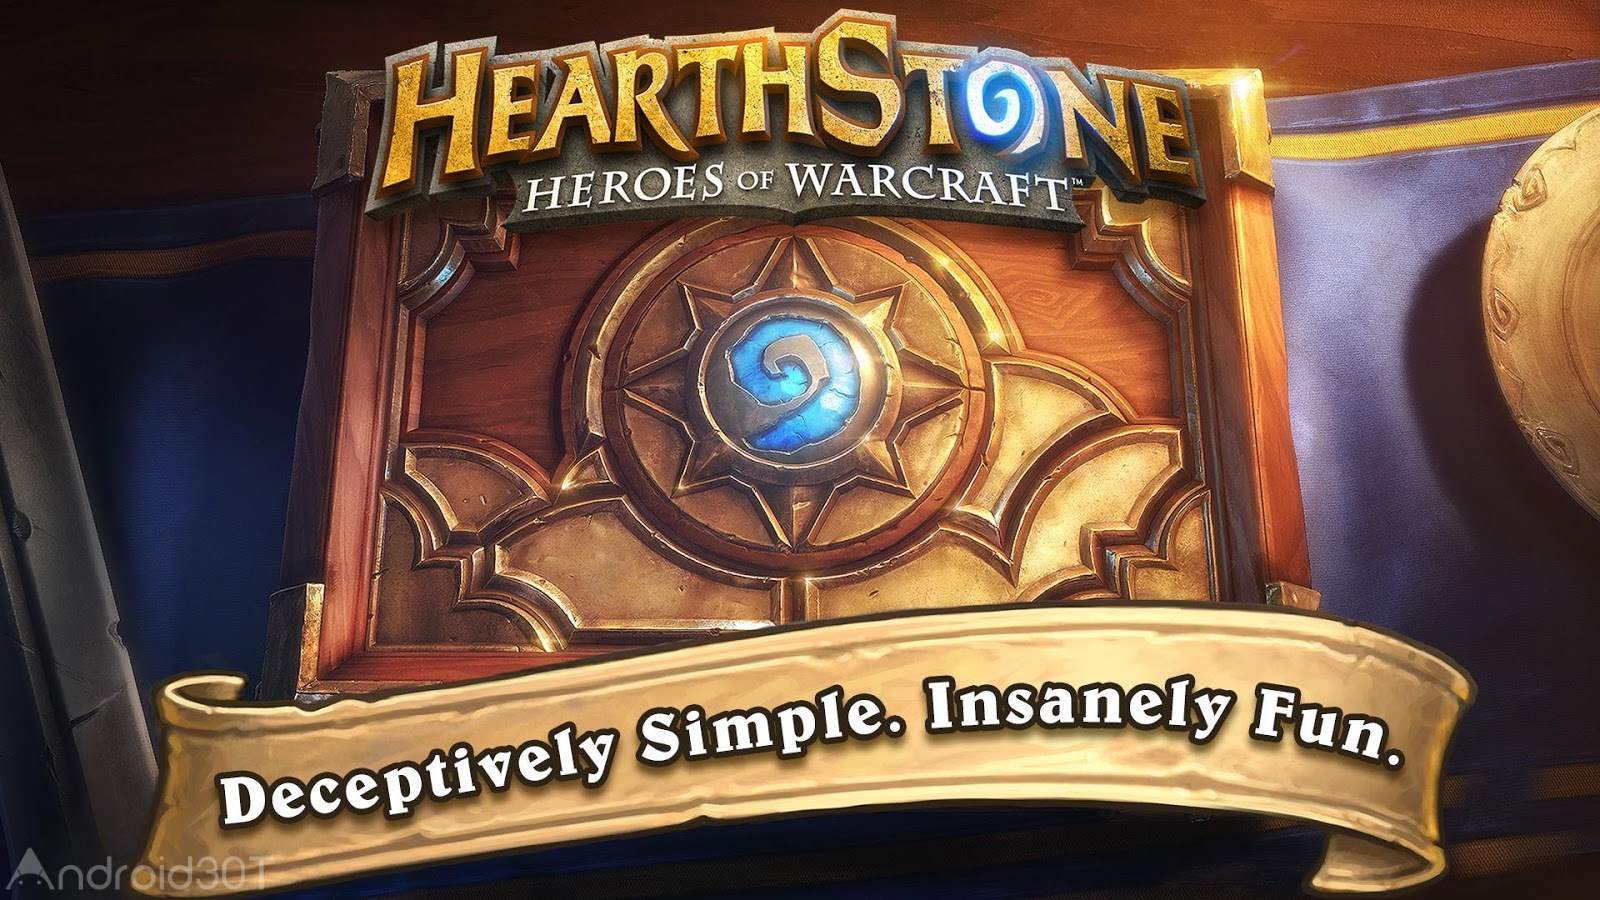 دانلود Hearthstone Heroes of Warcraft 25.6.168788 – بازی کارتی قهرمانان وارکرافت اندروید